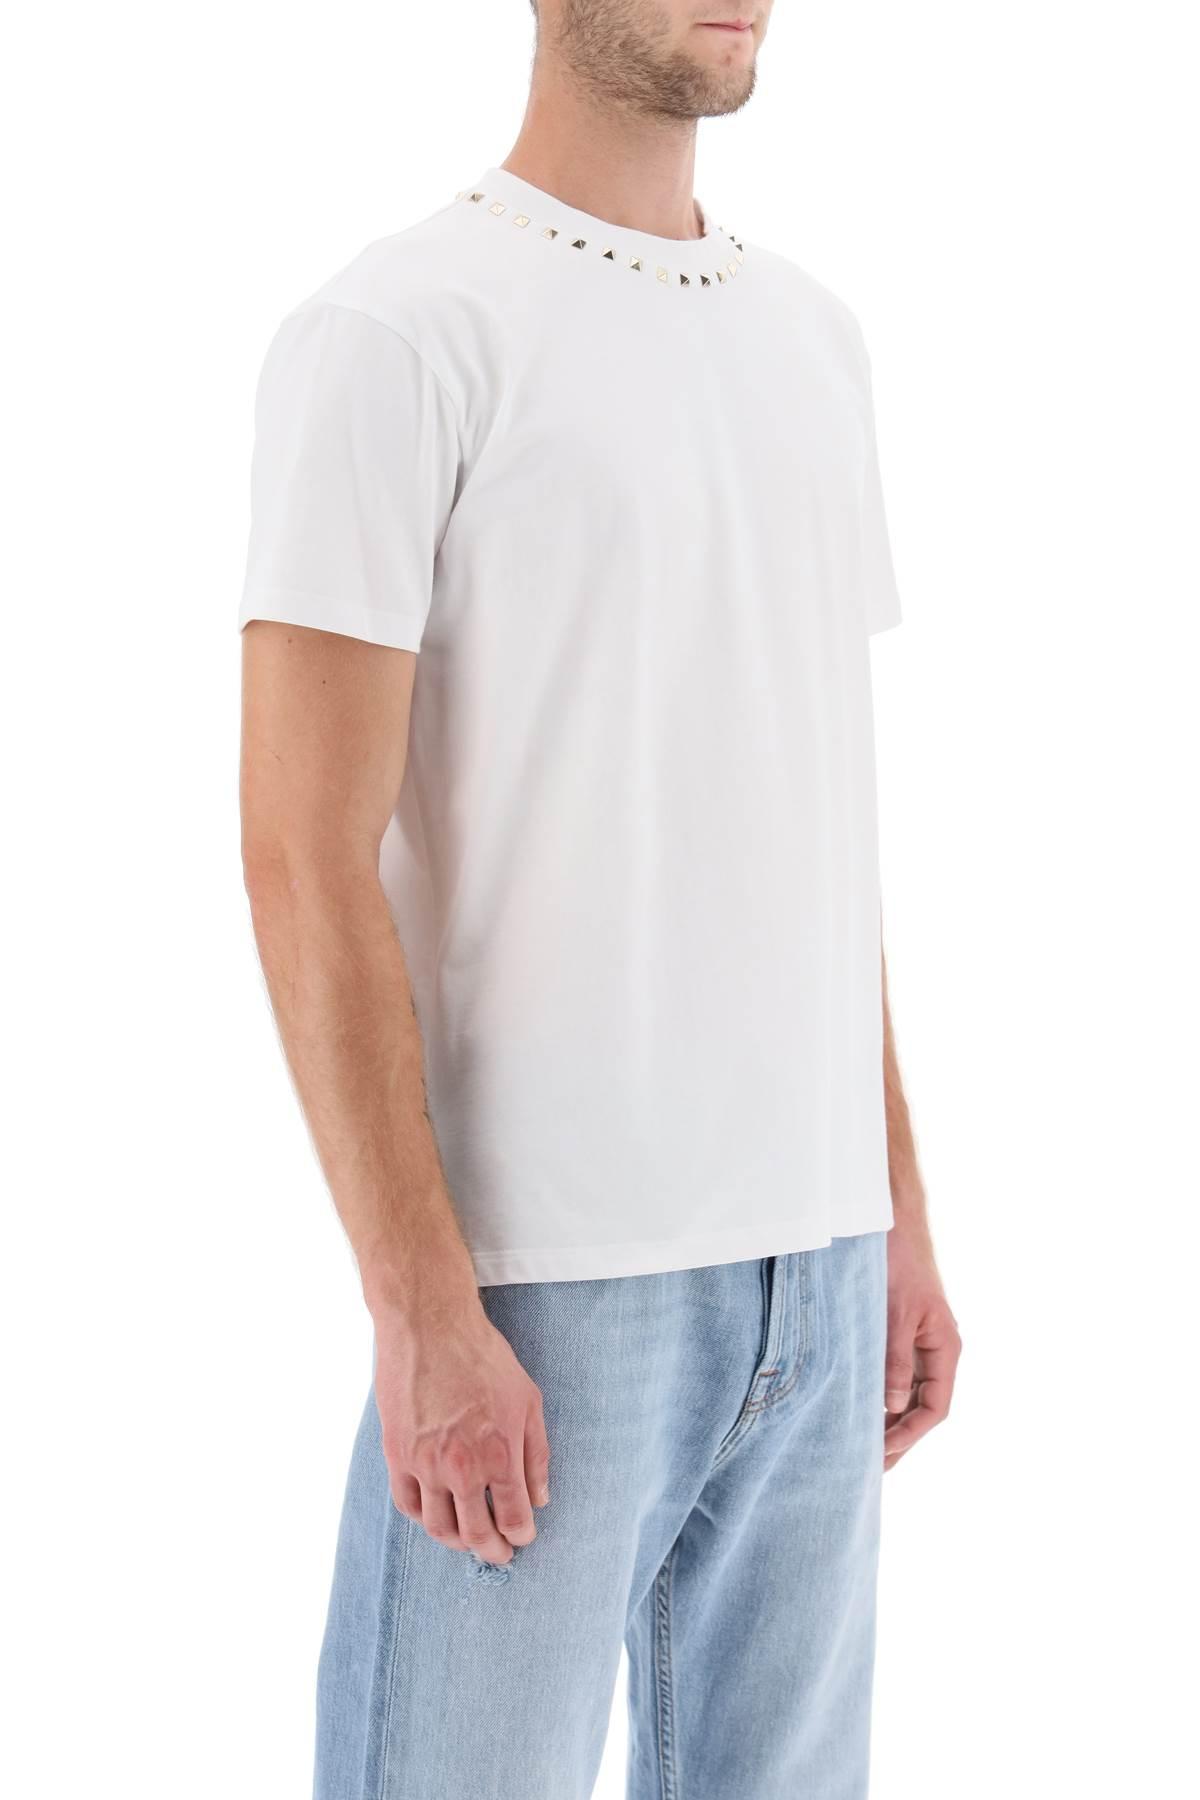 Valentino Garavani Rockstud cotton shirt - White